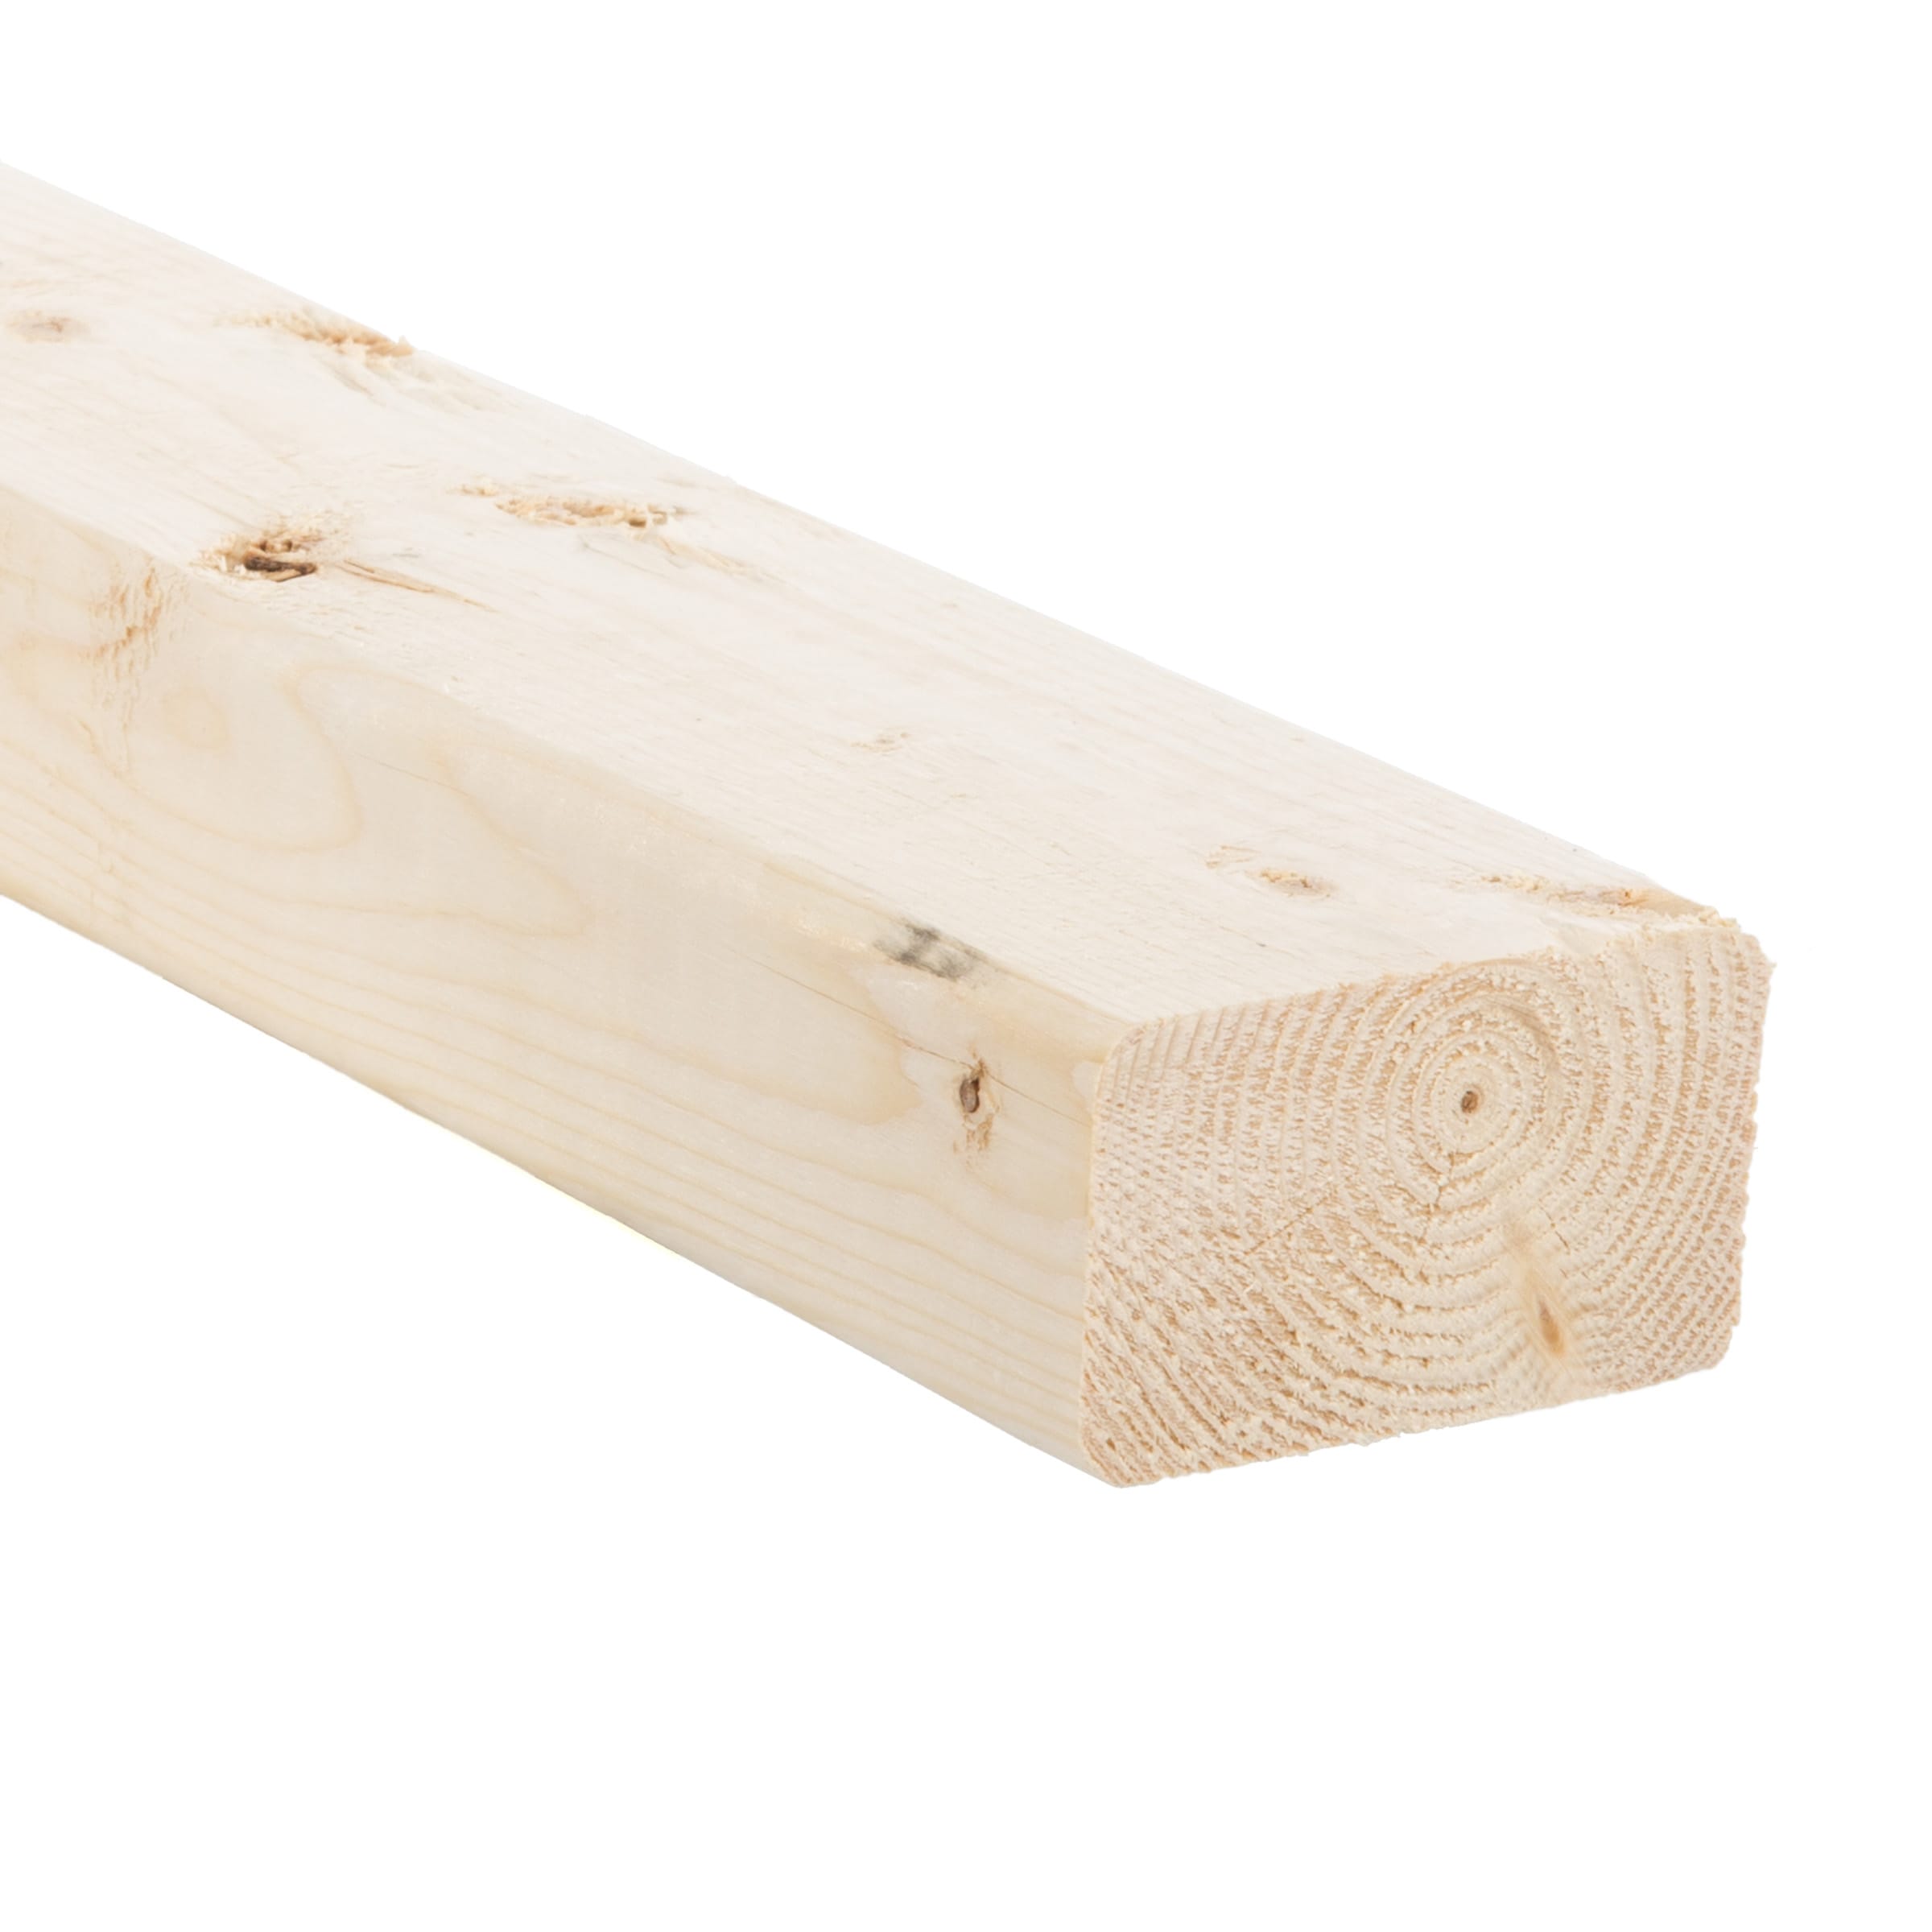 2 x 4 x 12' #2 Construction Grade Lumber